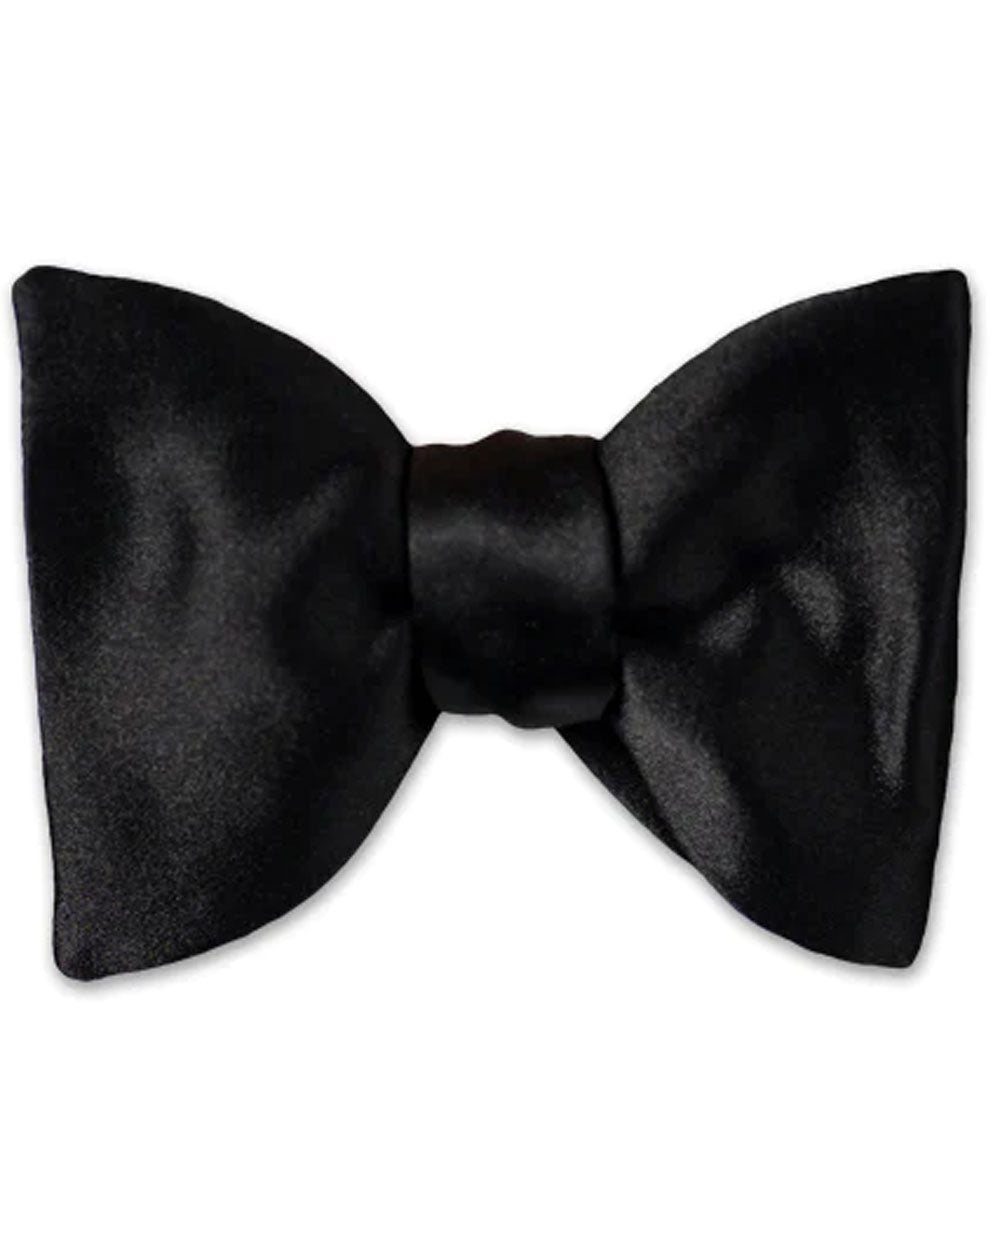 Black Large Satin Bow Tie